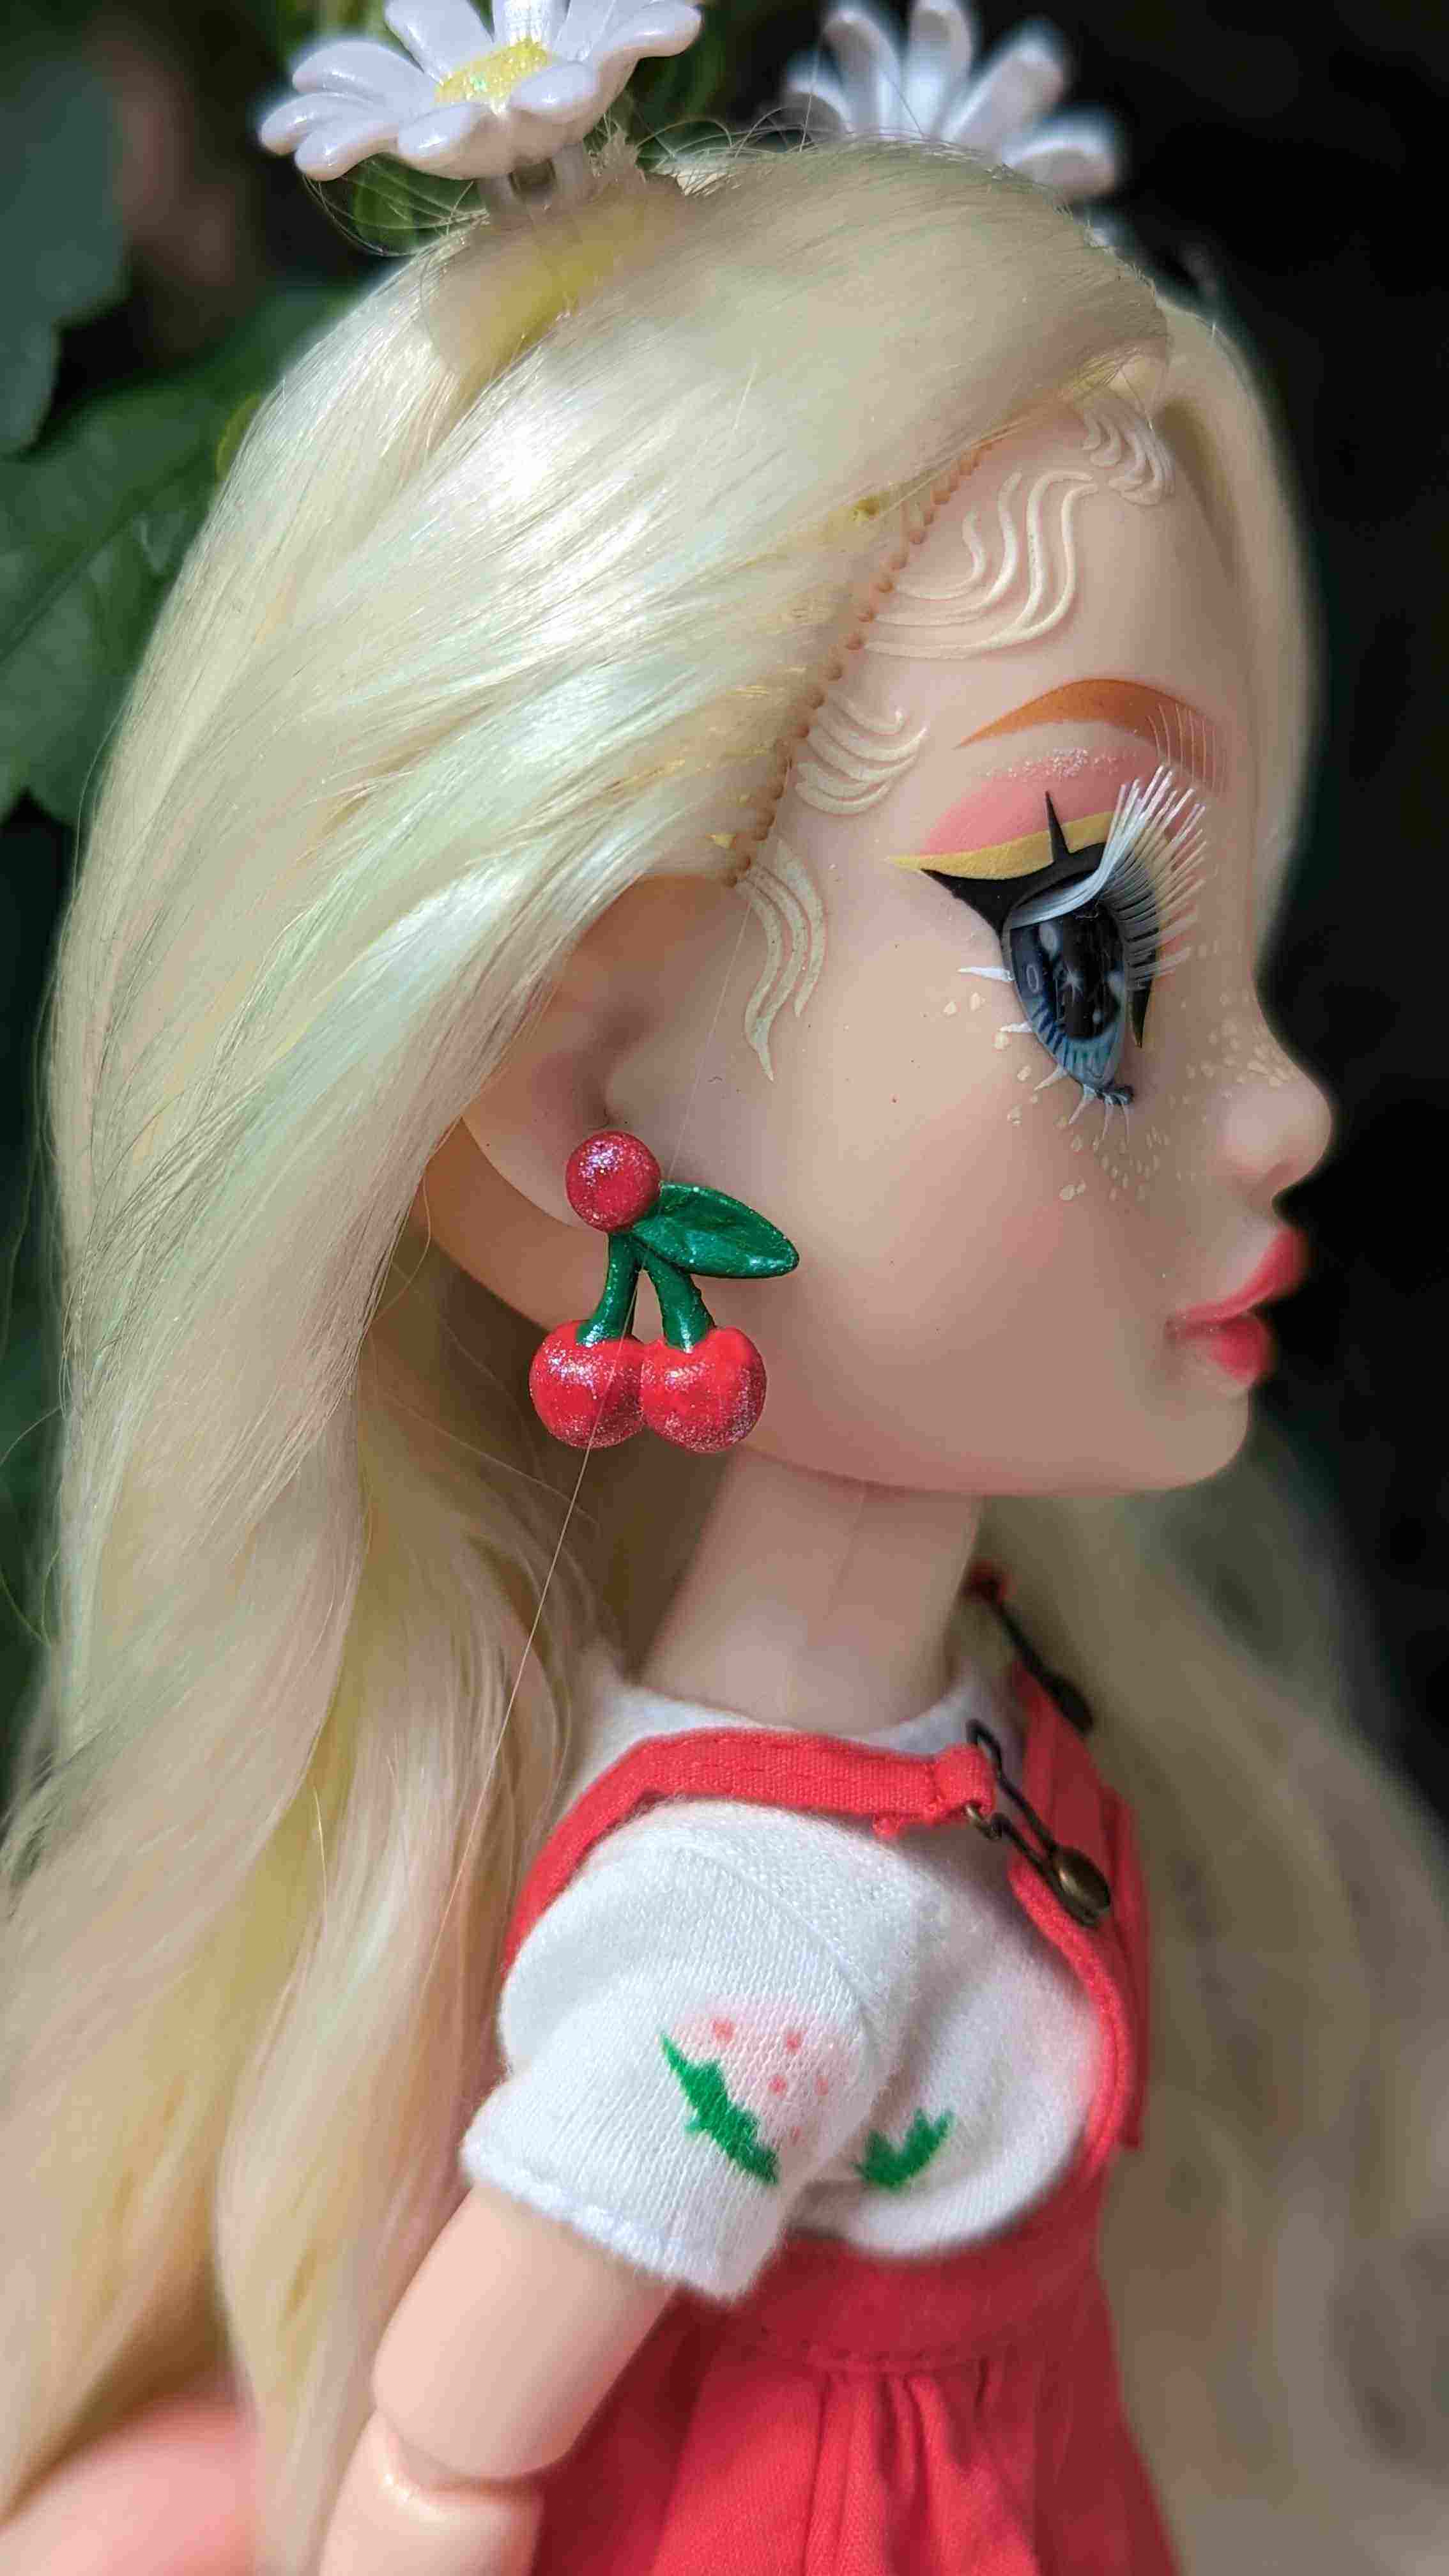 Rainbow High/Shadow High Cherry Earrings, 3D models download